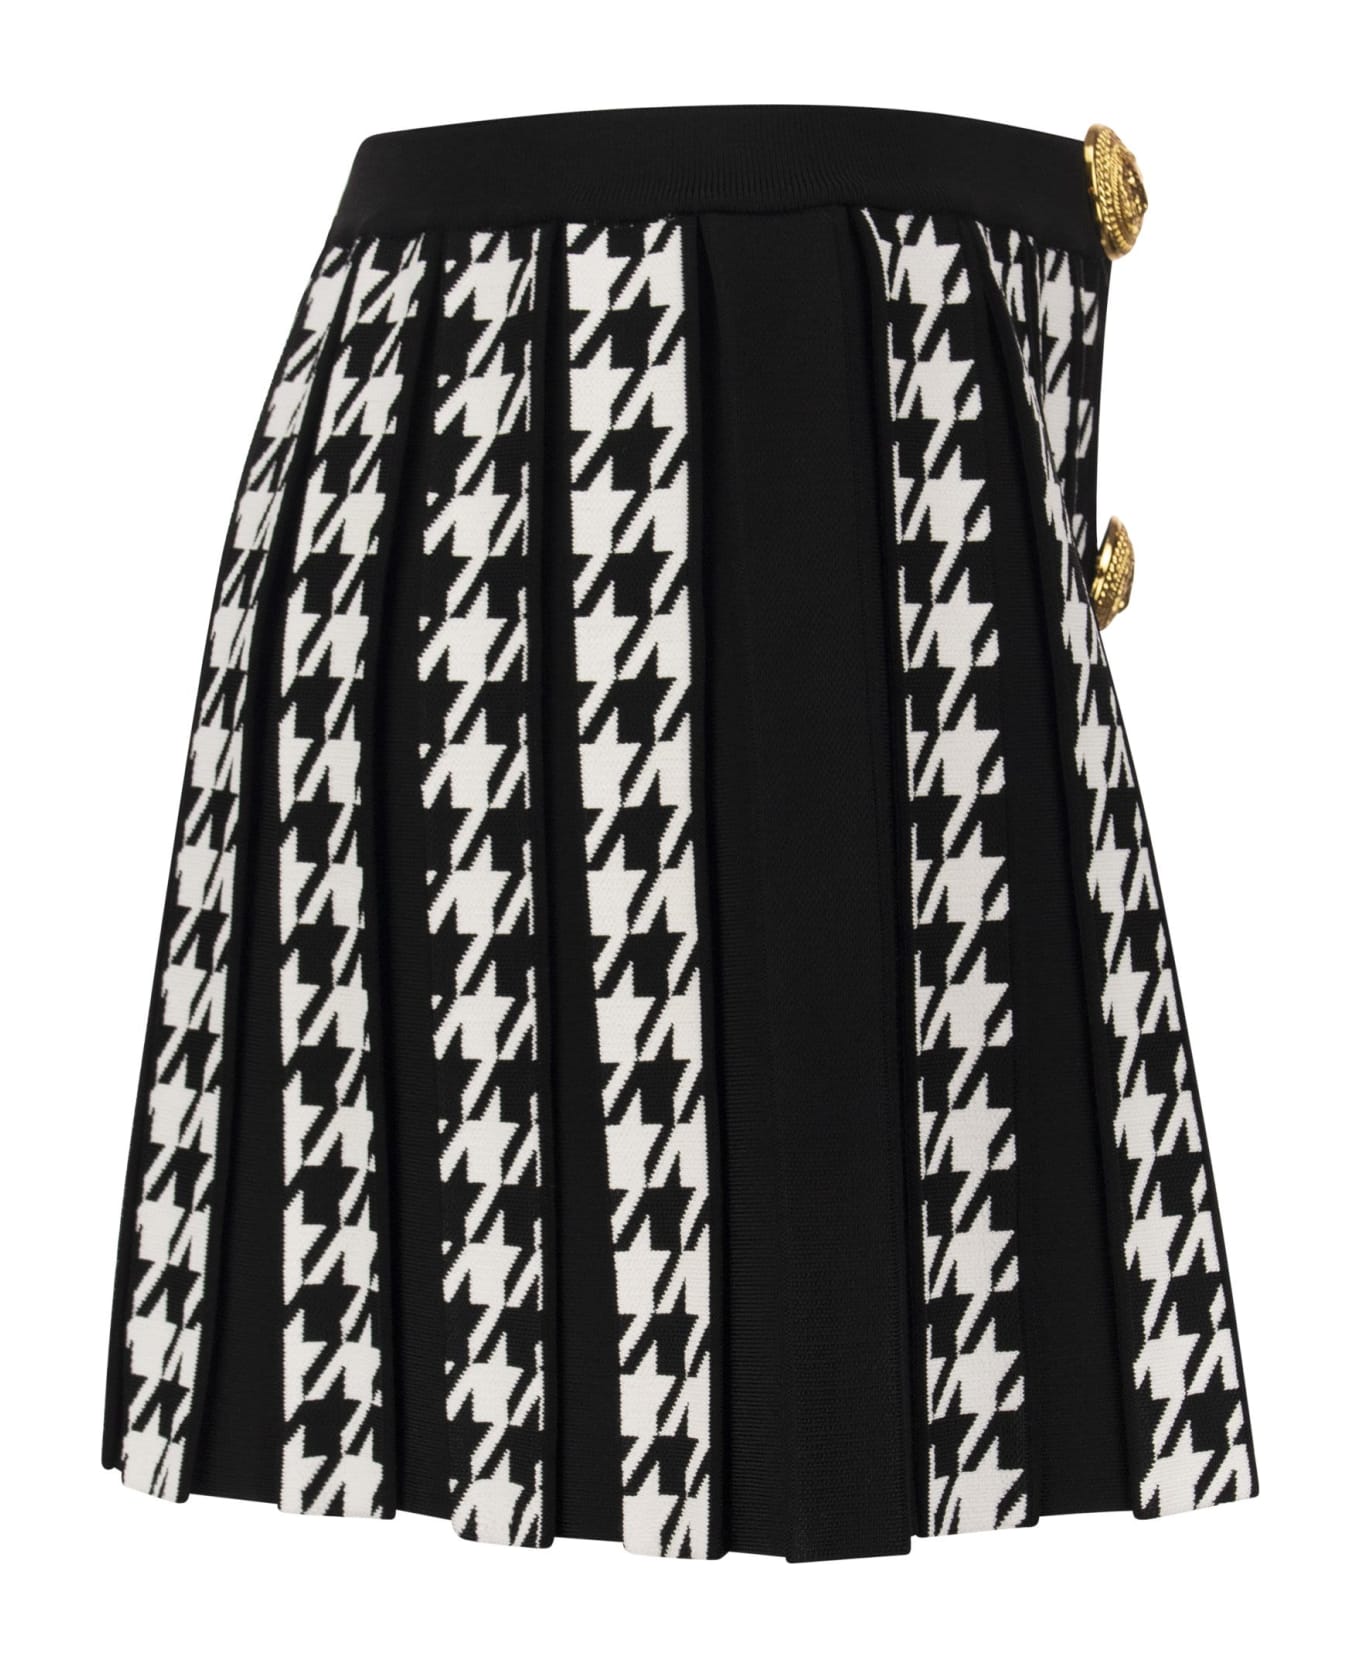 Balmain Pleated Miniskirt With Buttons - Black/white スカート